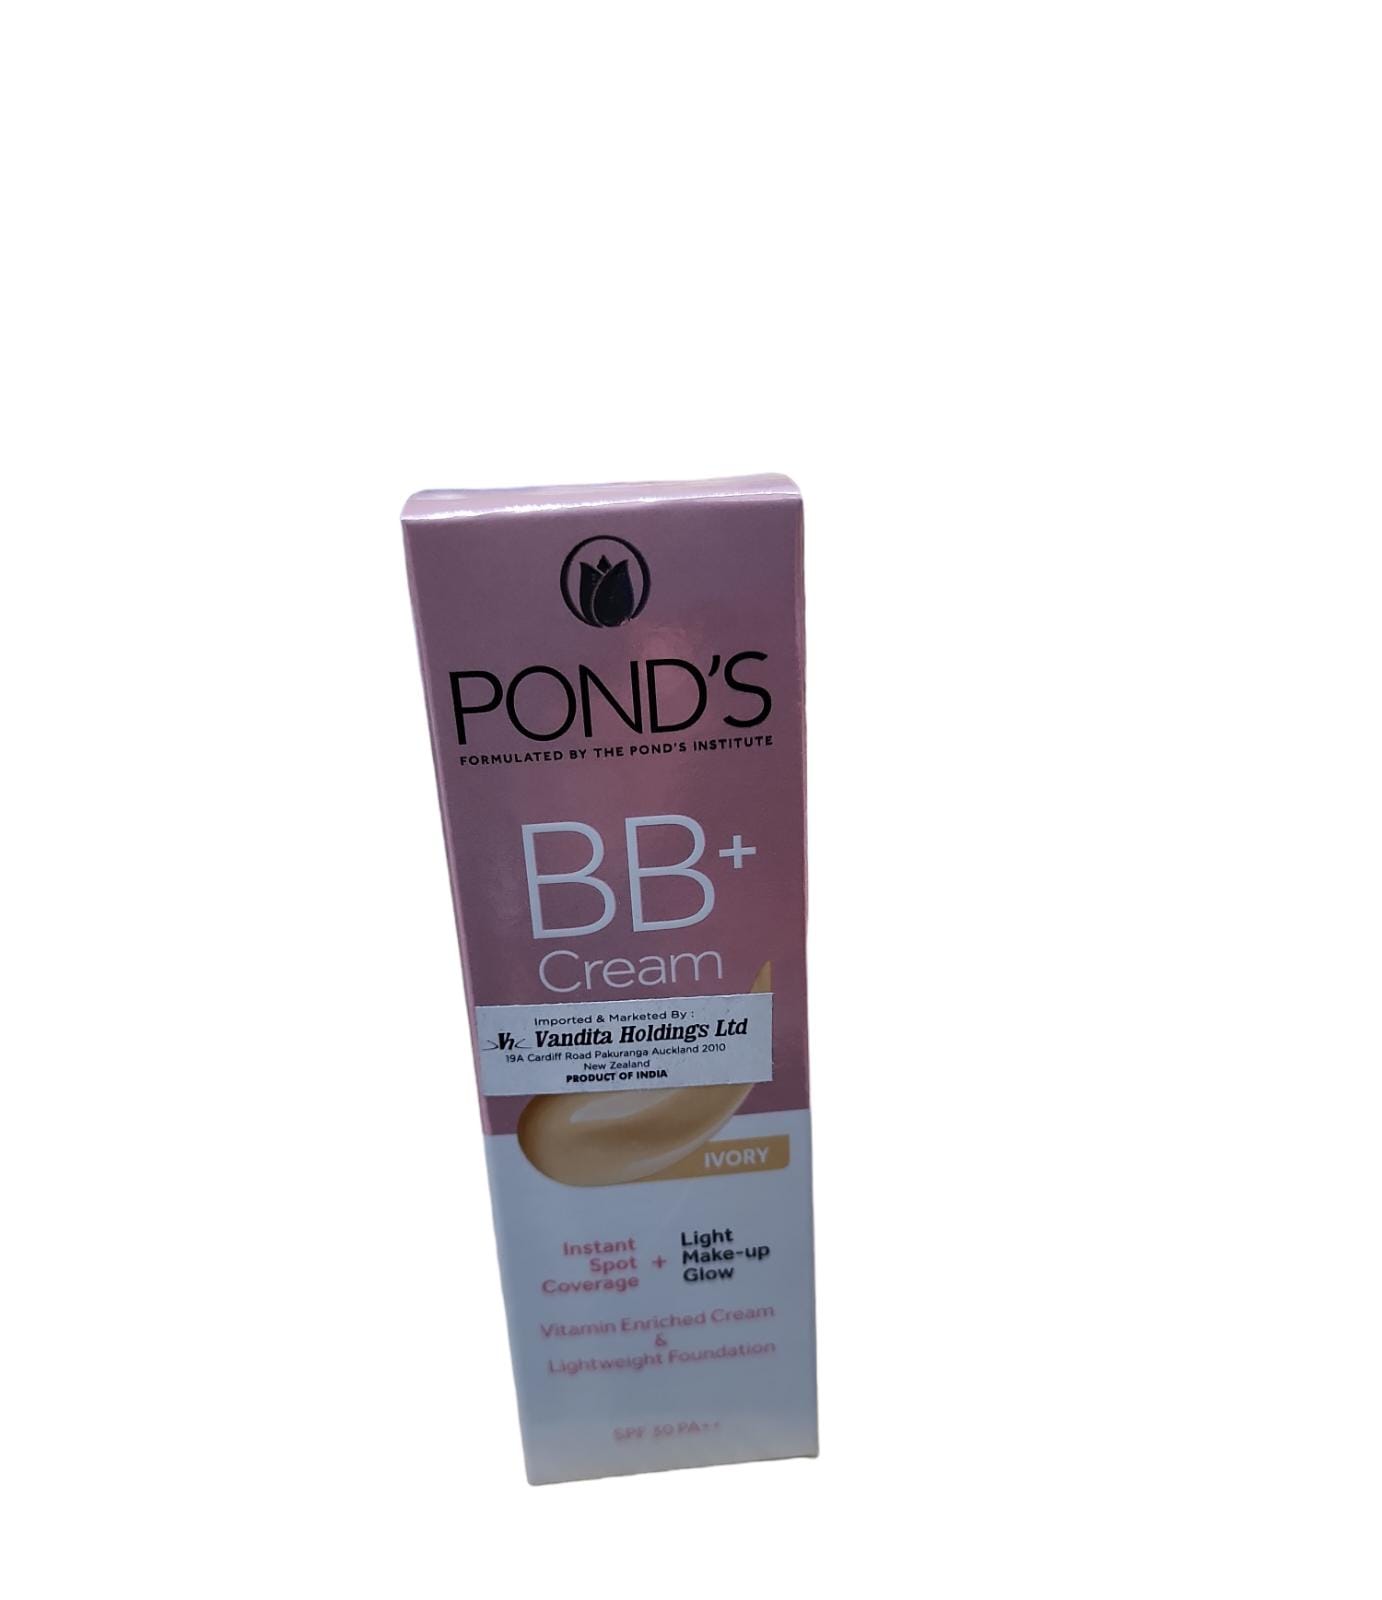 Pond’s BB+ Cream